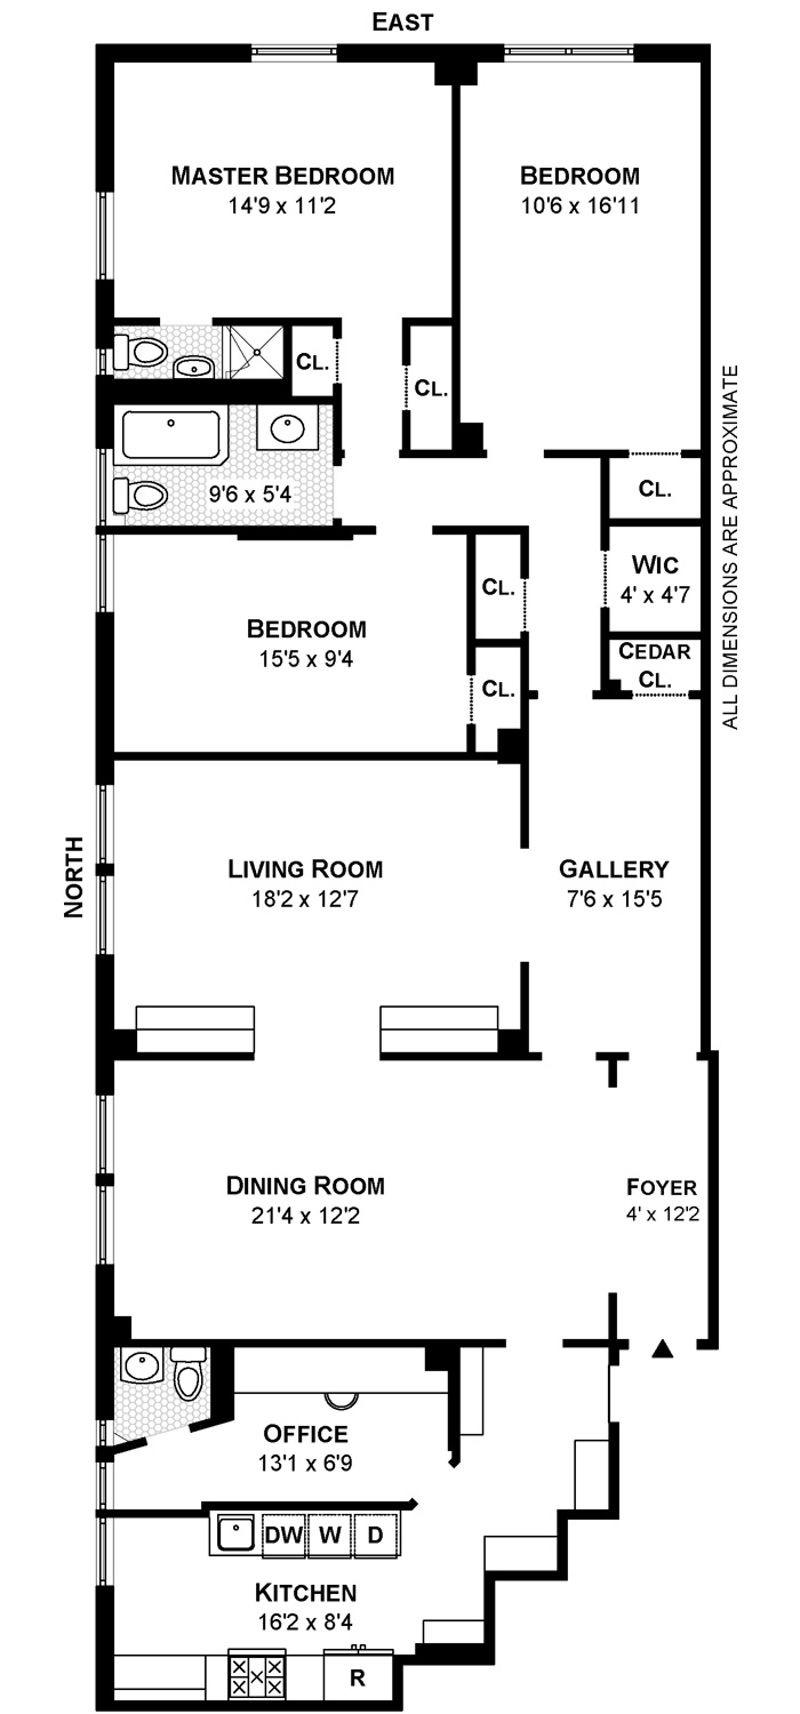 Floorplan for 645 West End Avenue, 2A